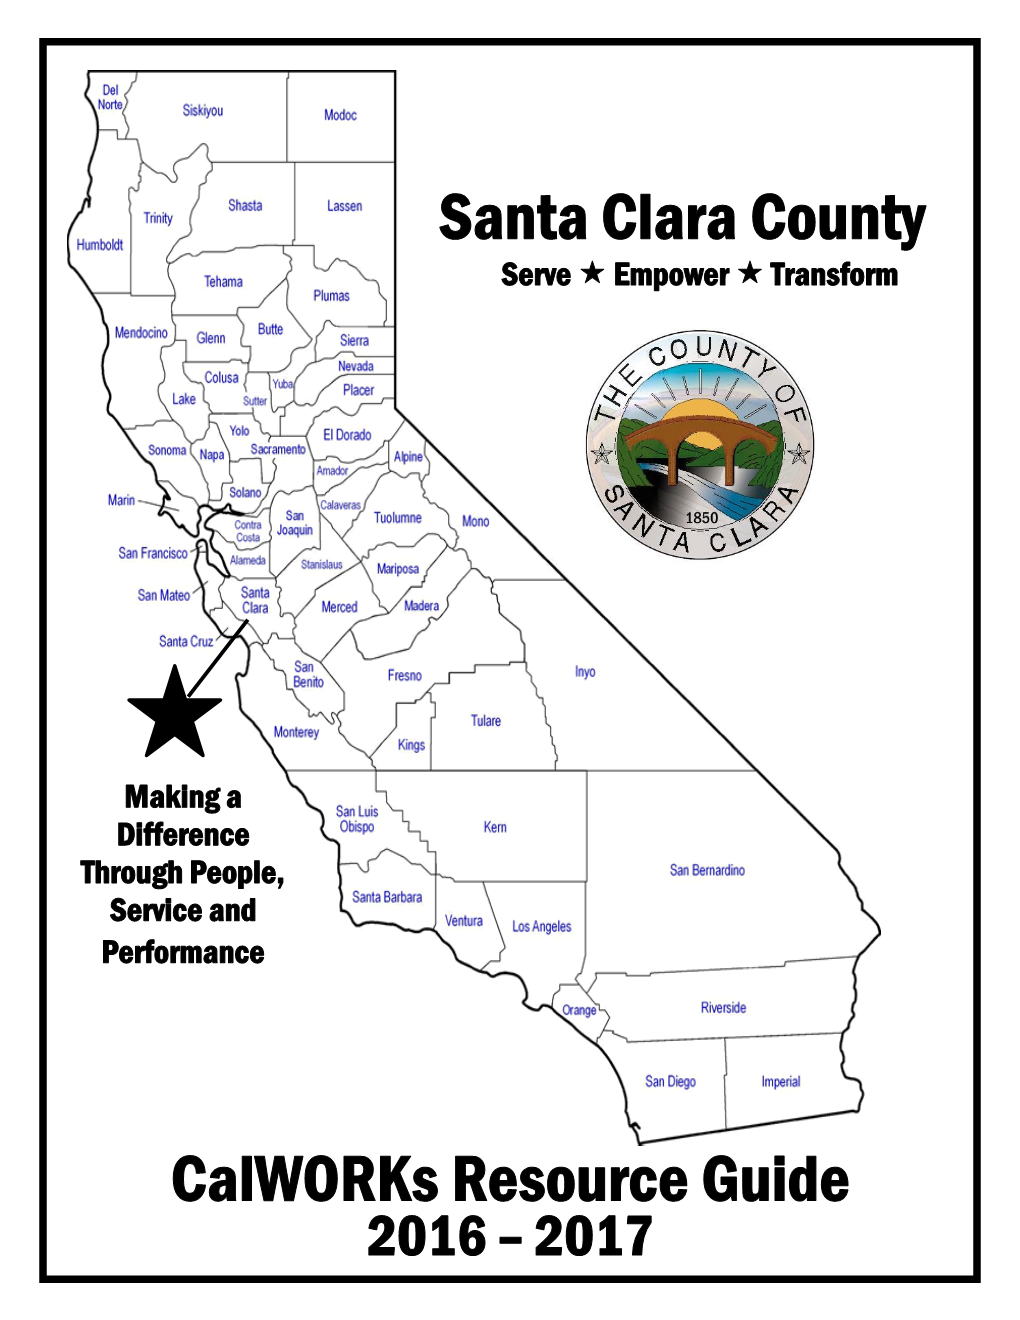 Santa Clara County Calworks Resource Guide